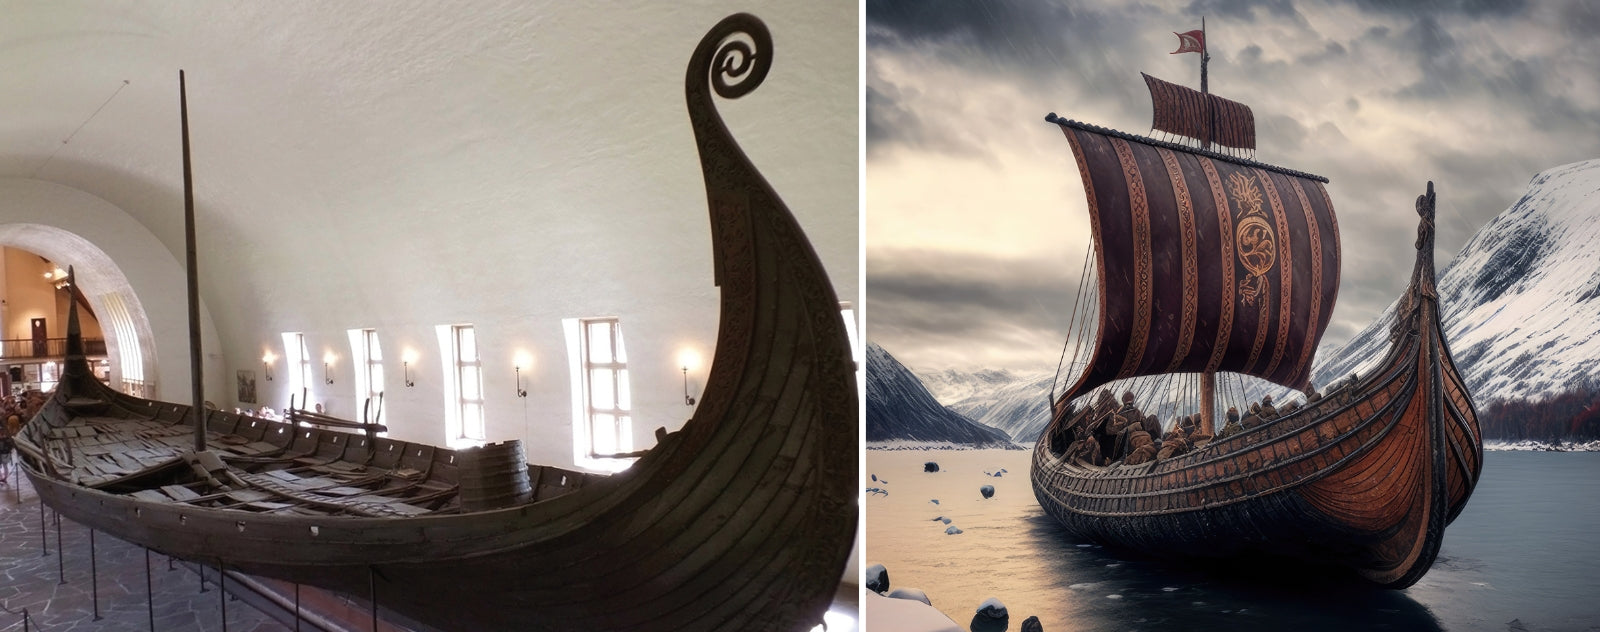 Barcos Vikingos